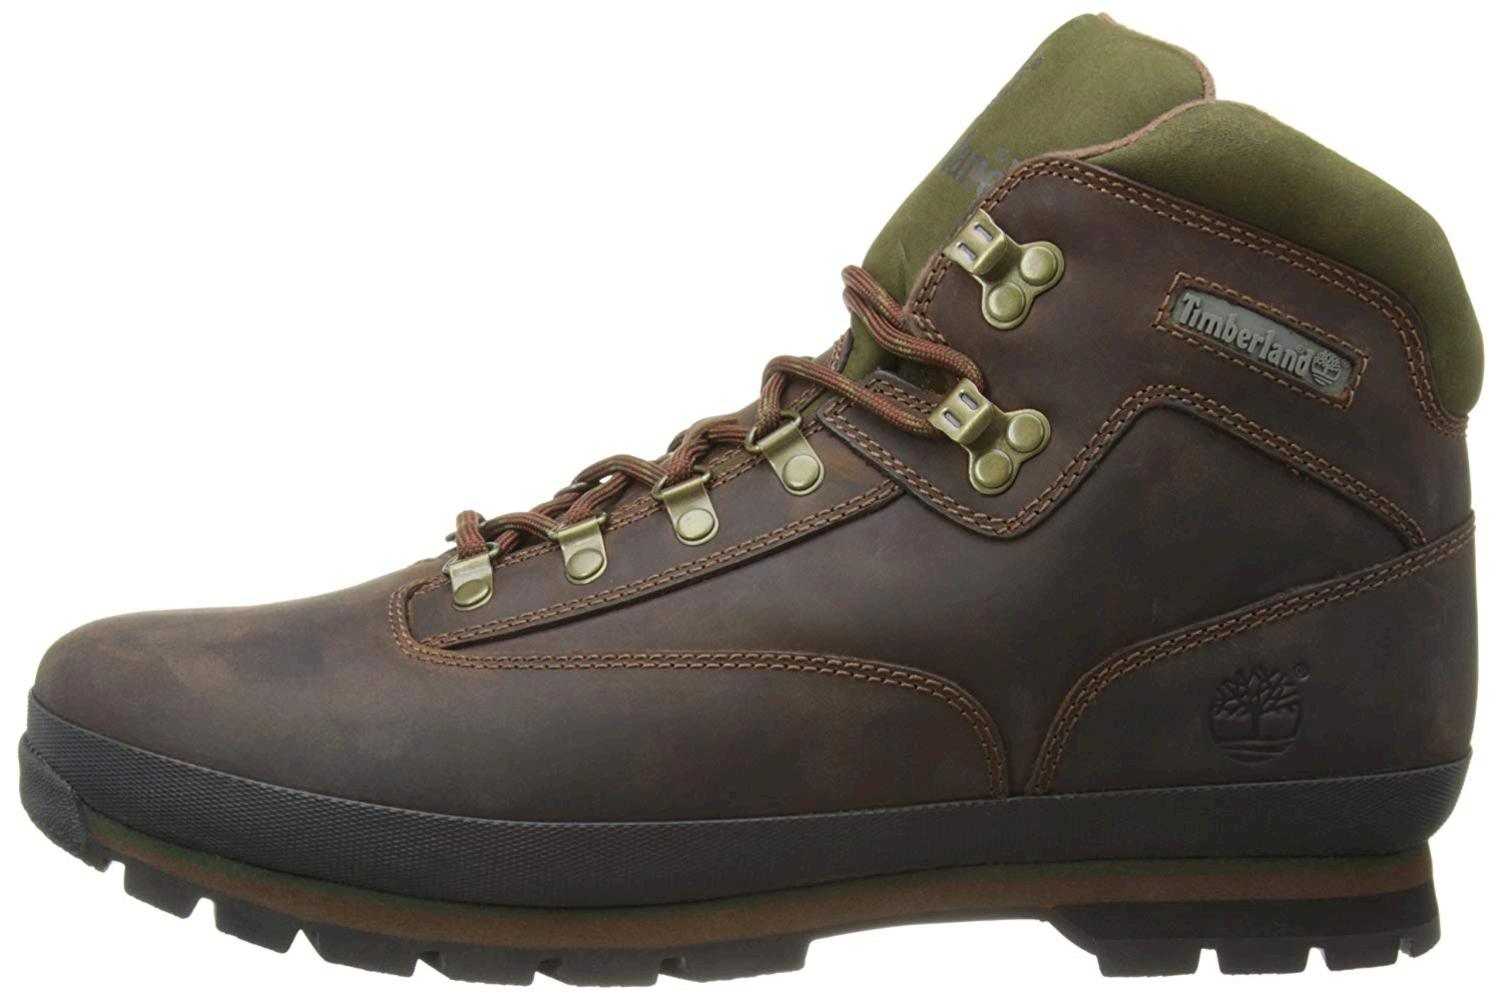 Timberland Men's Euro Hiker Boot, Brown, Size 11.5 | eBay